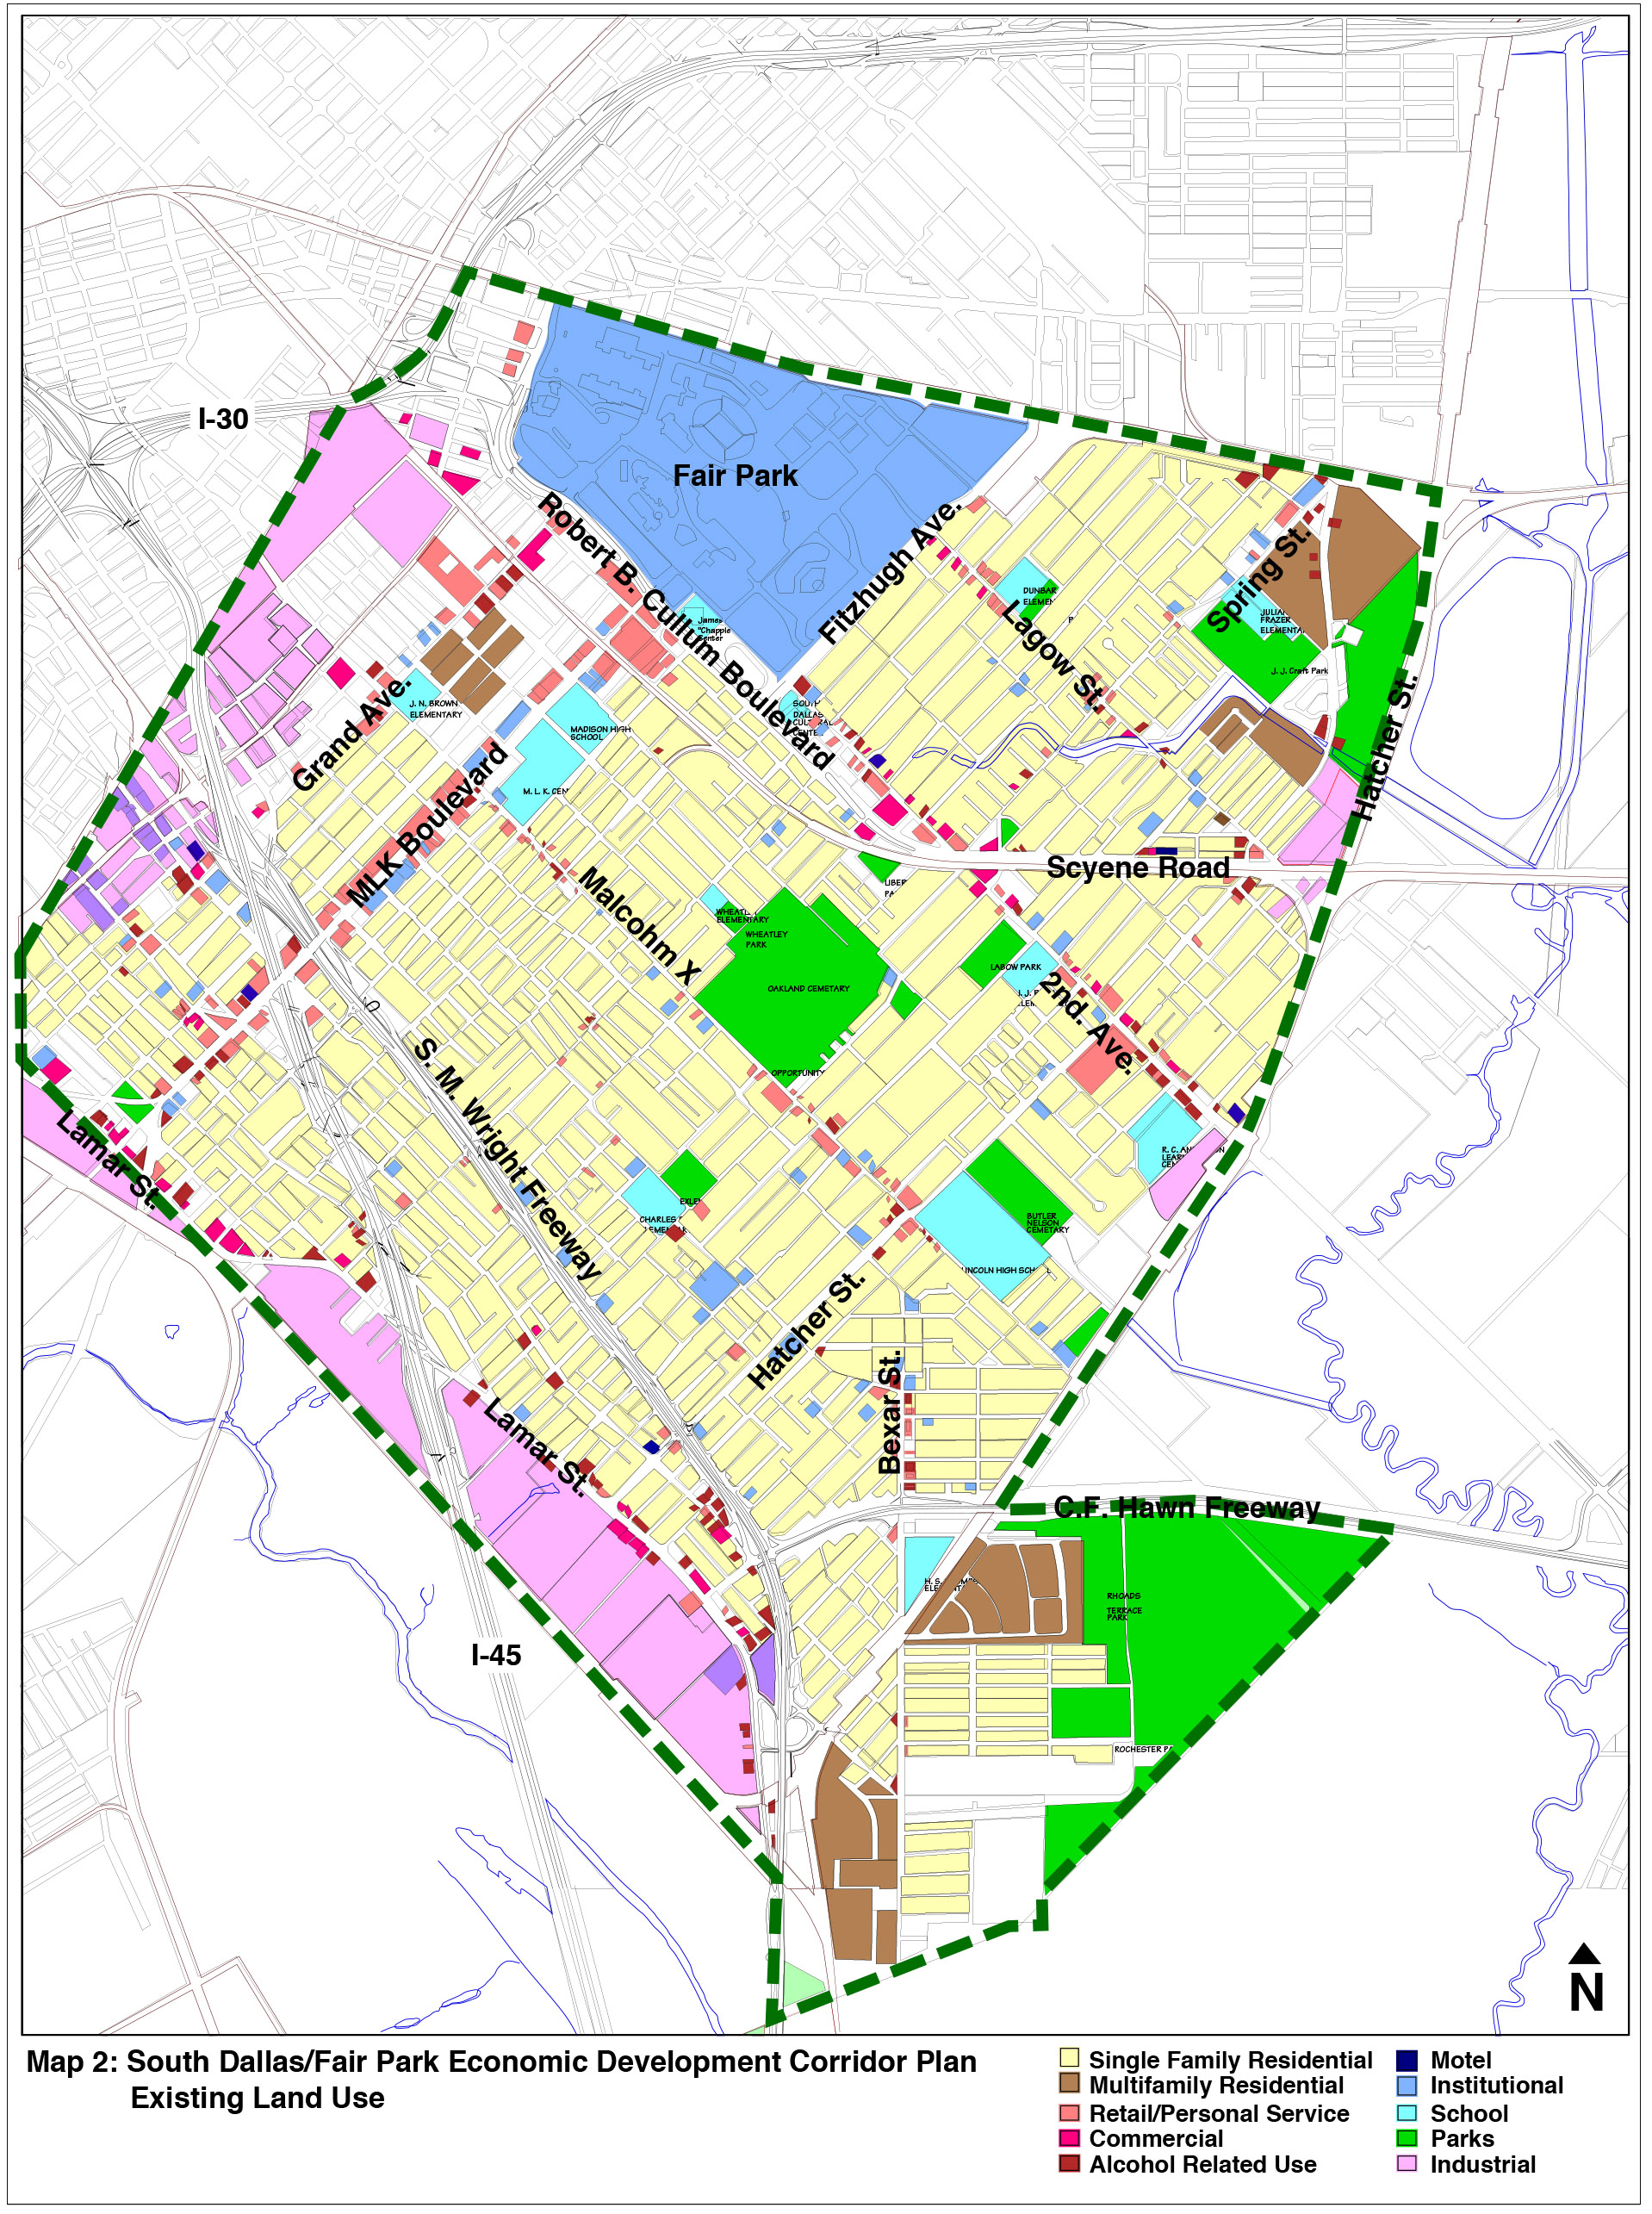 South Dallas Fair Park Economic Development Corridor Plan 2001 13 